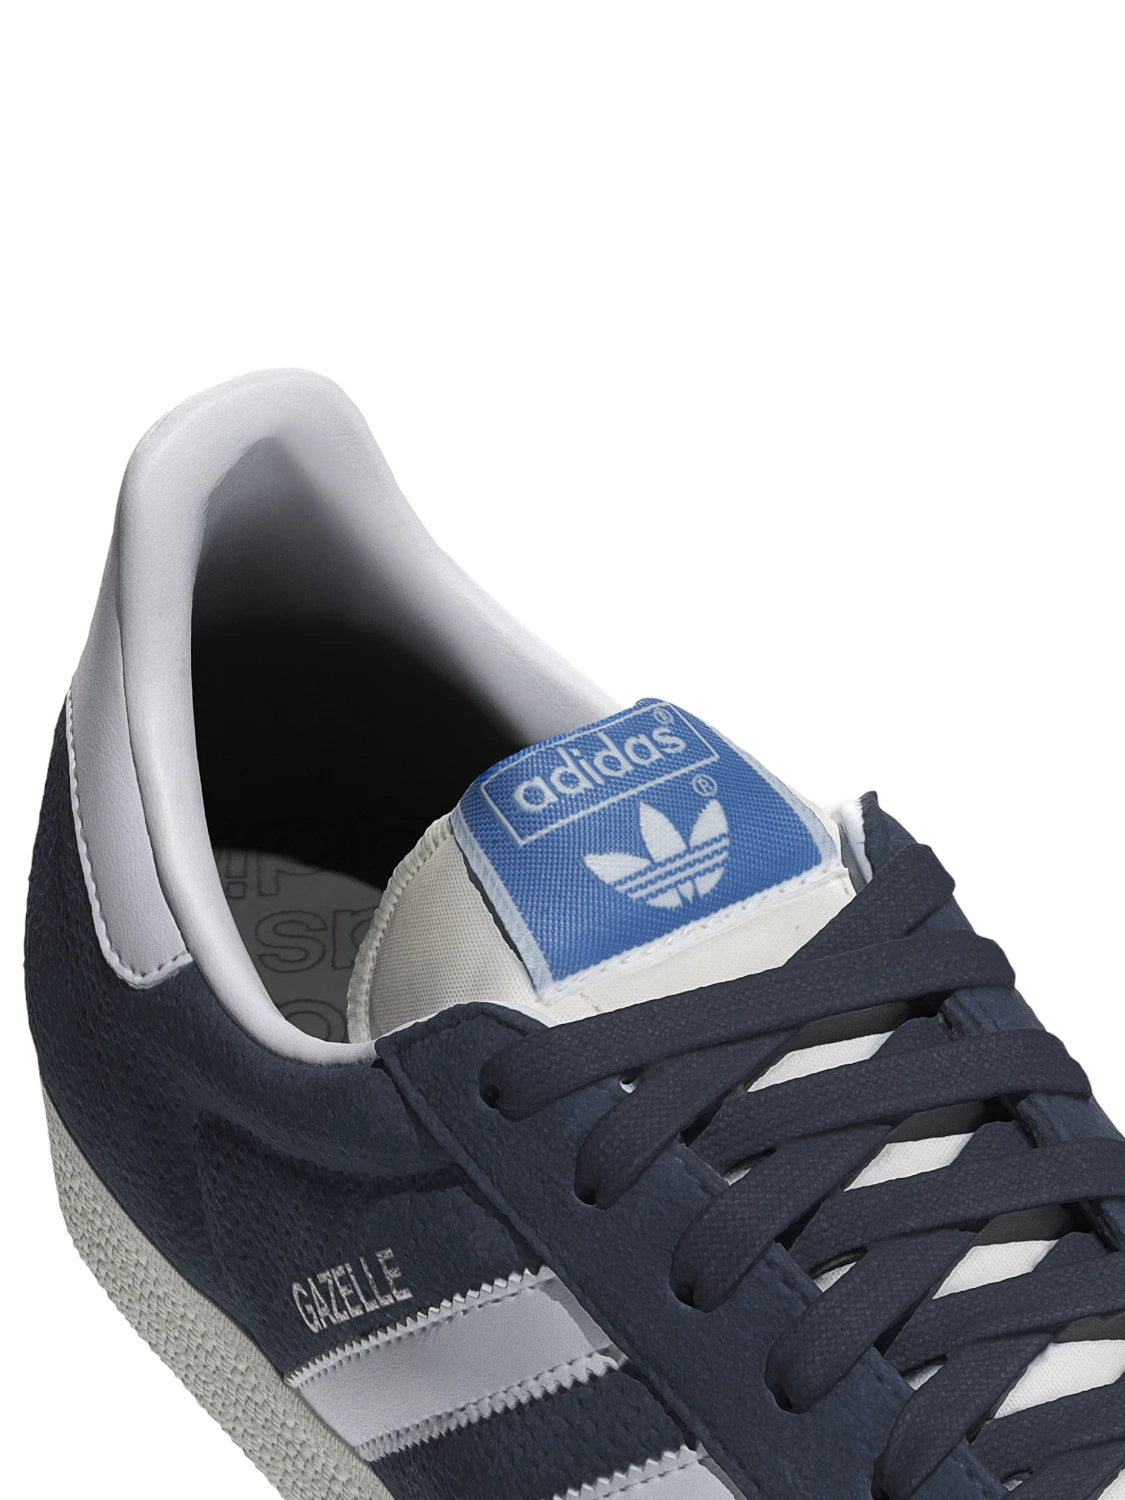 Sneakers Adidas GAZELLE-Adidas Originals-Sneakers-Vittorio Citro Boutique